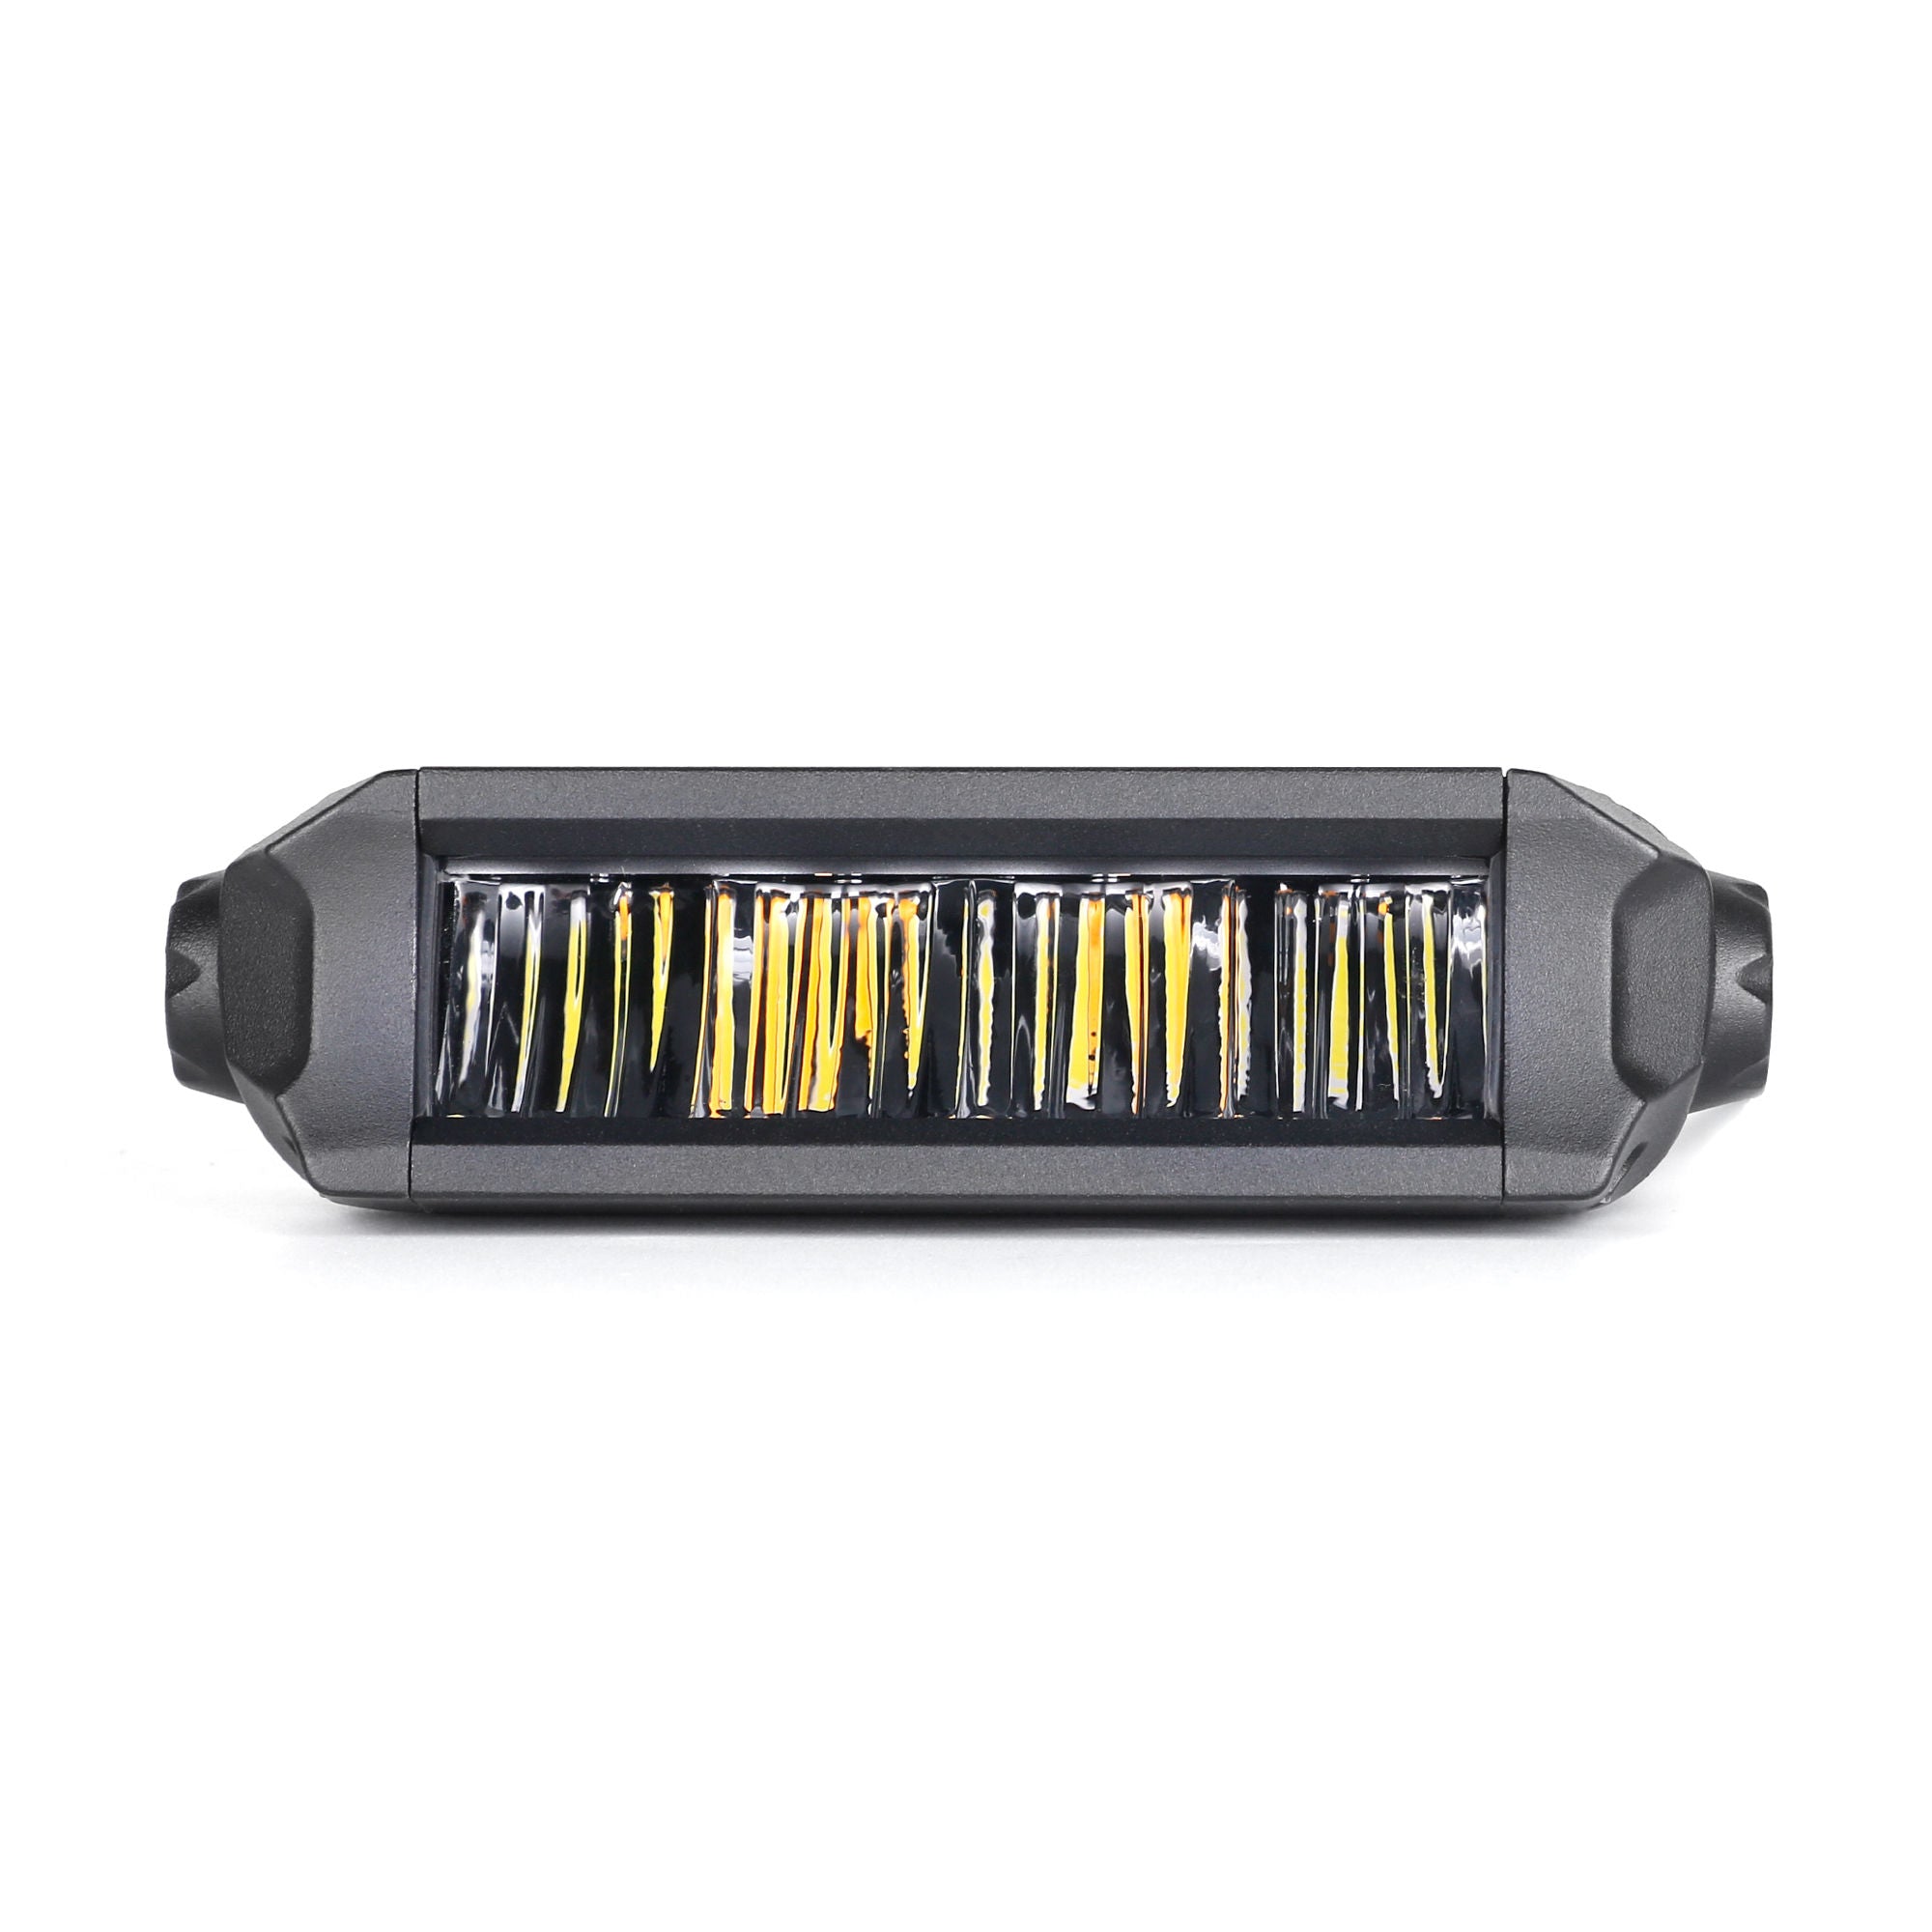 RTXOA416C40 - Street Legal Multi-Function Single Row Light Bar, 5W Led, Auxiliary Fog Light+Strobe Light, 6", 718Lm